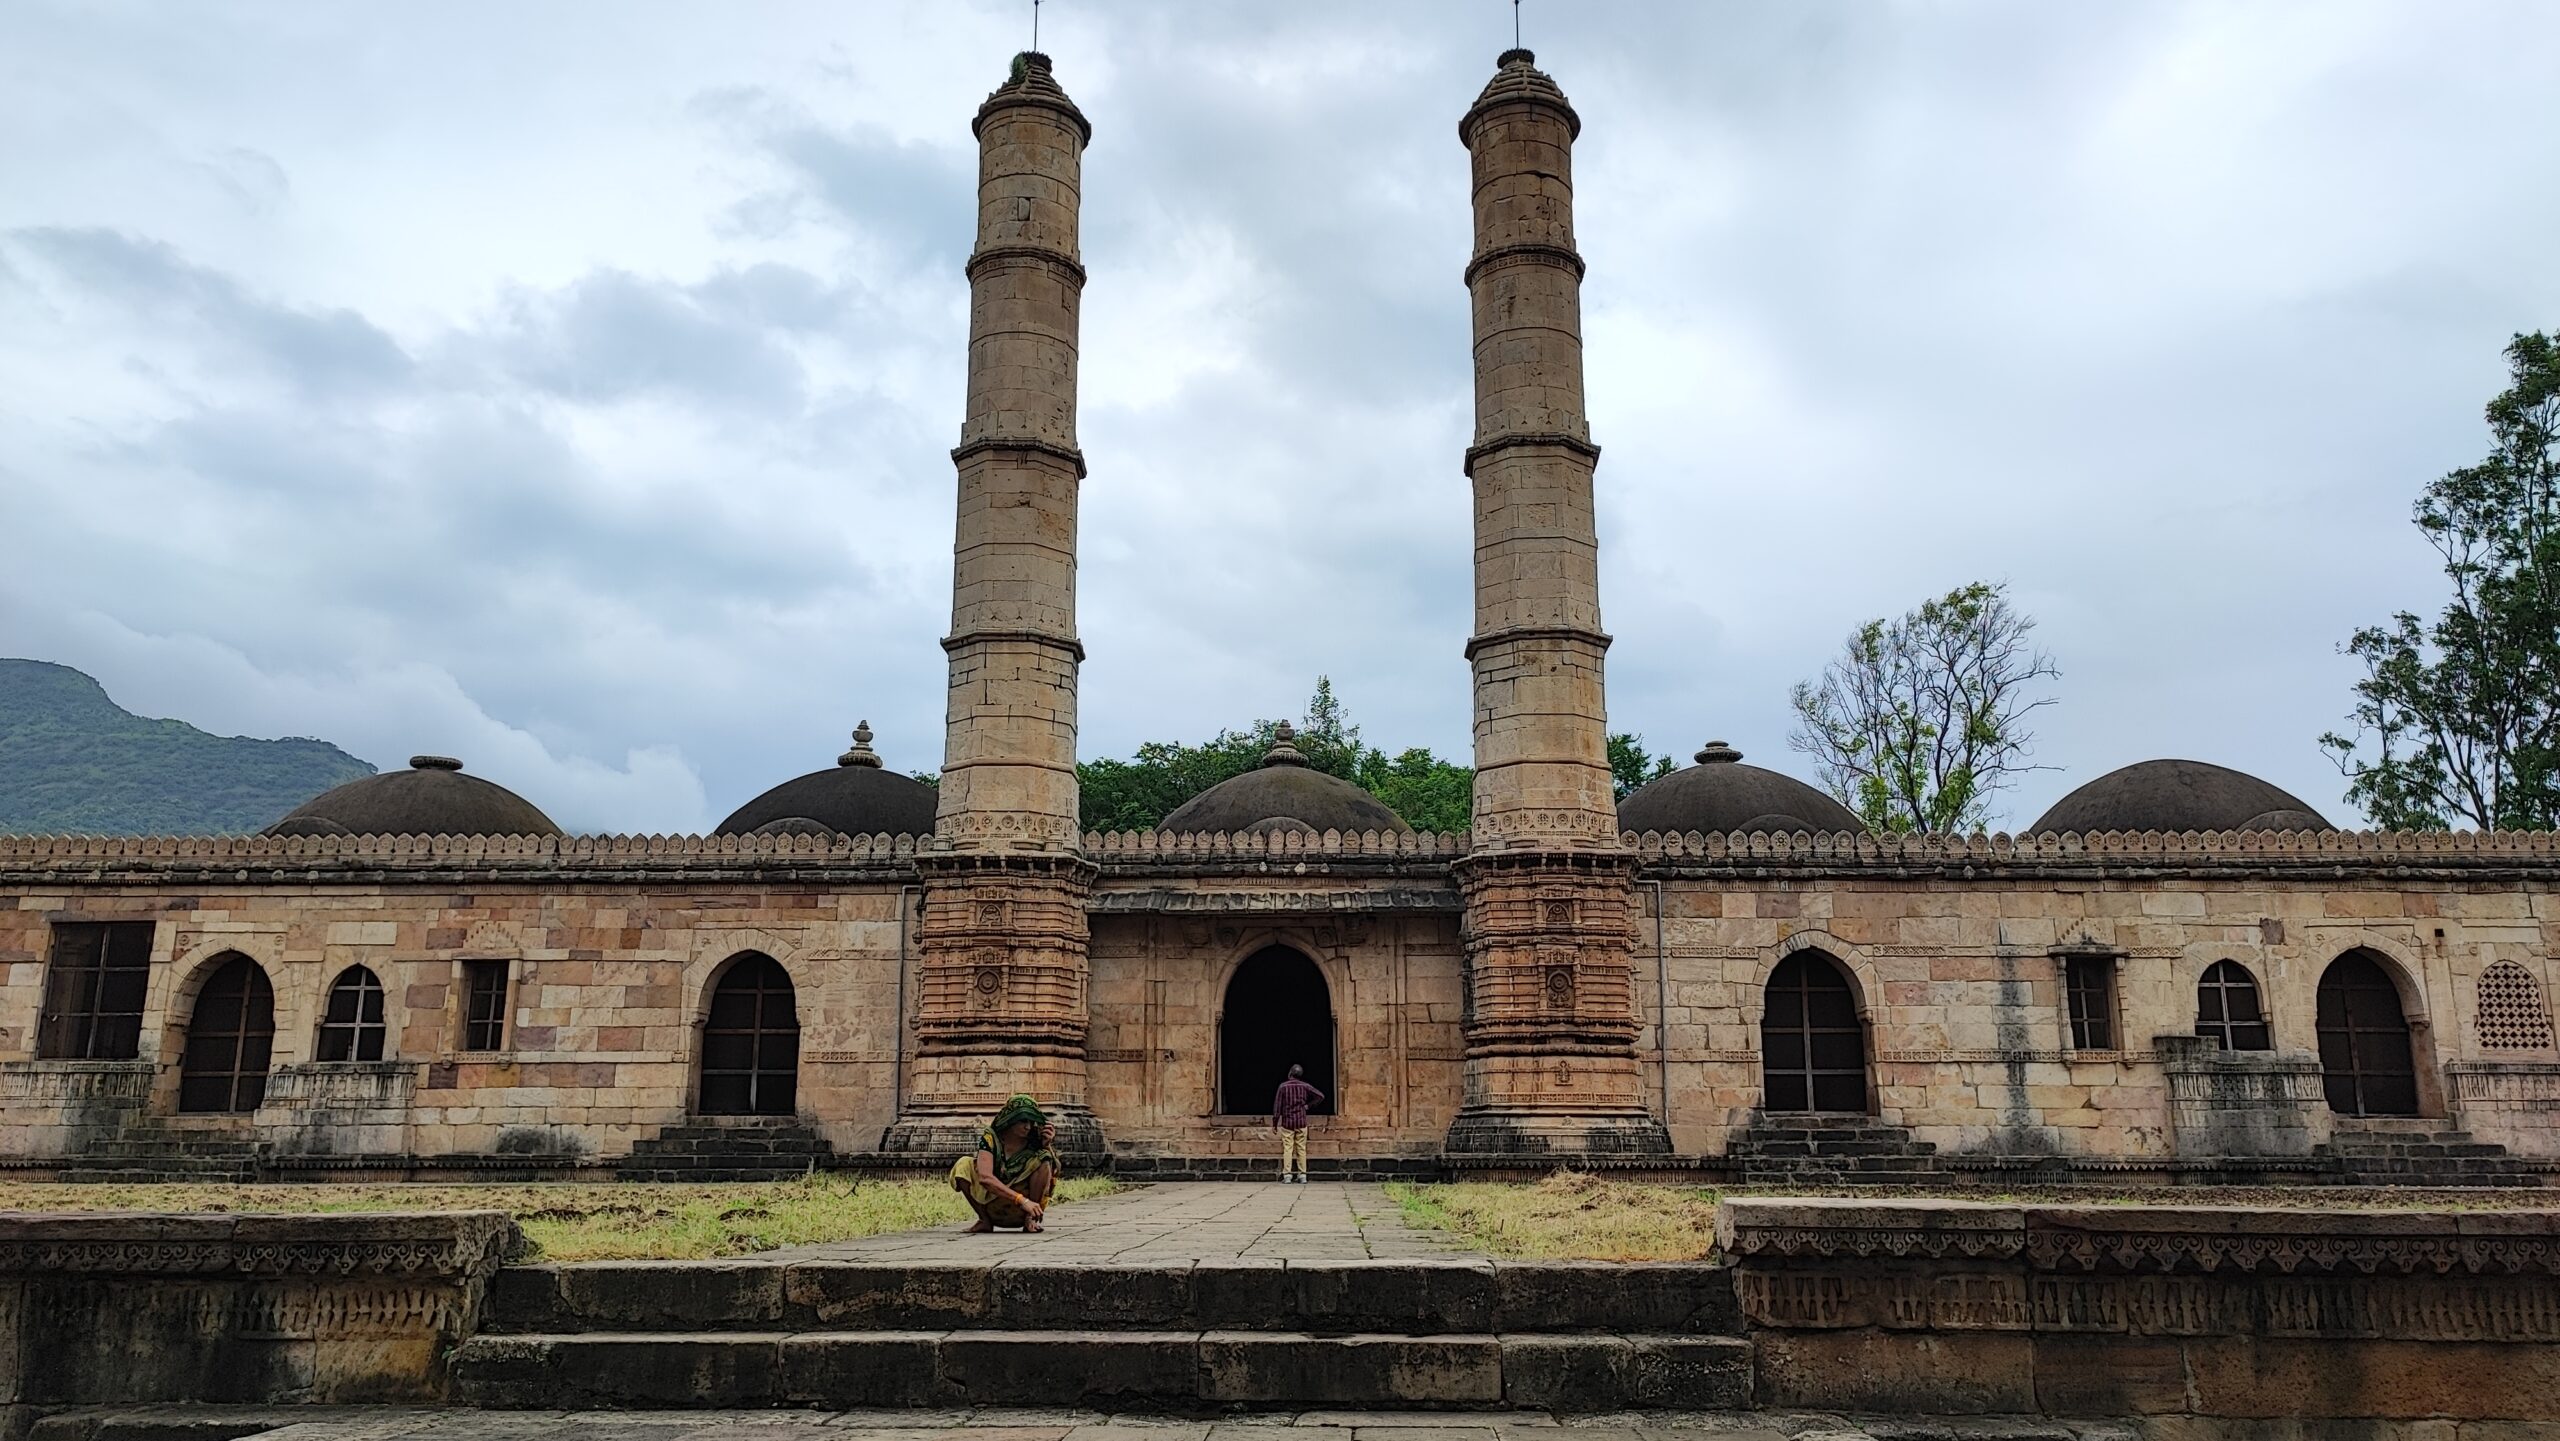 Champaner-Pavagadh archaeological park